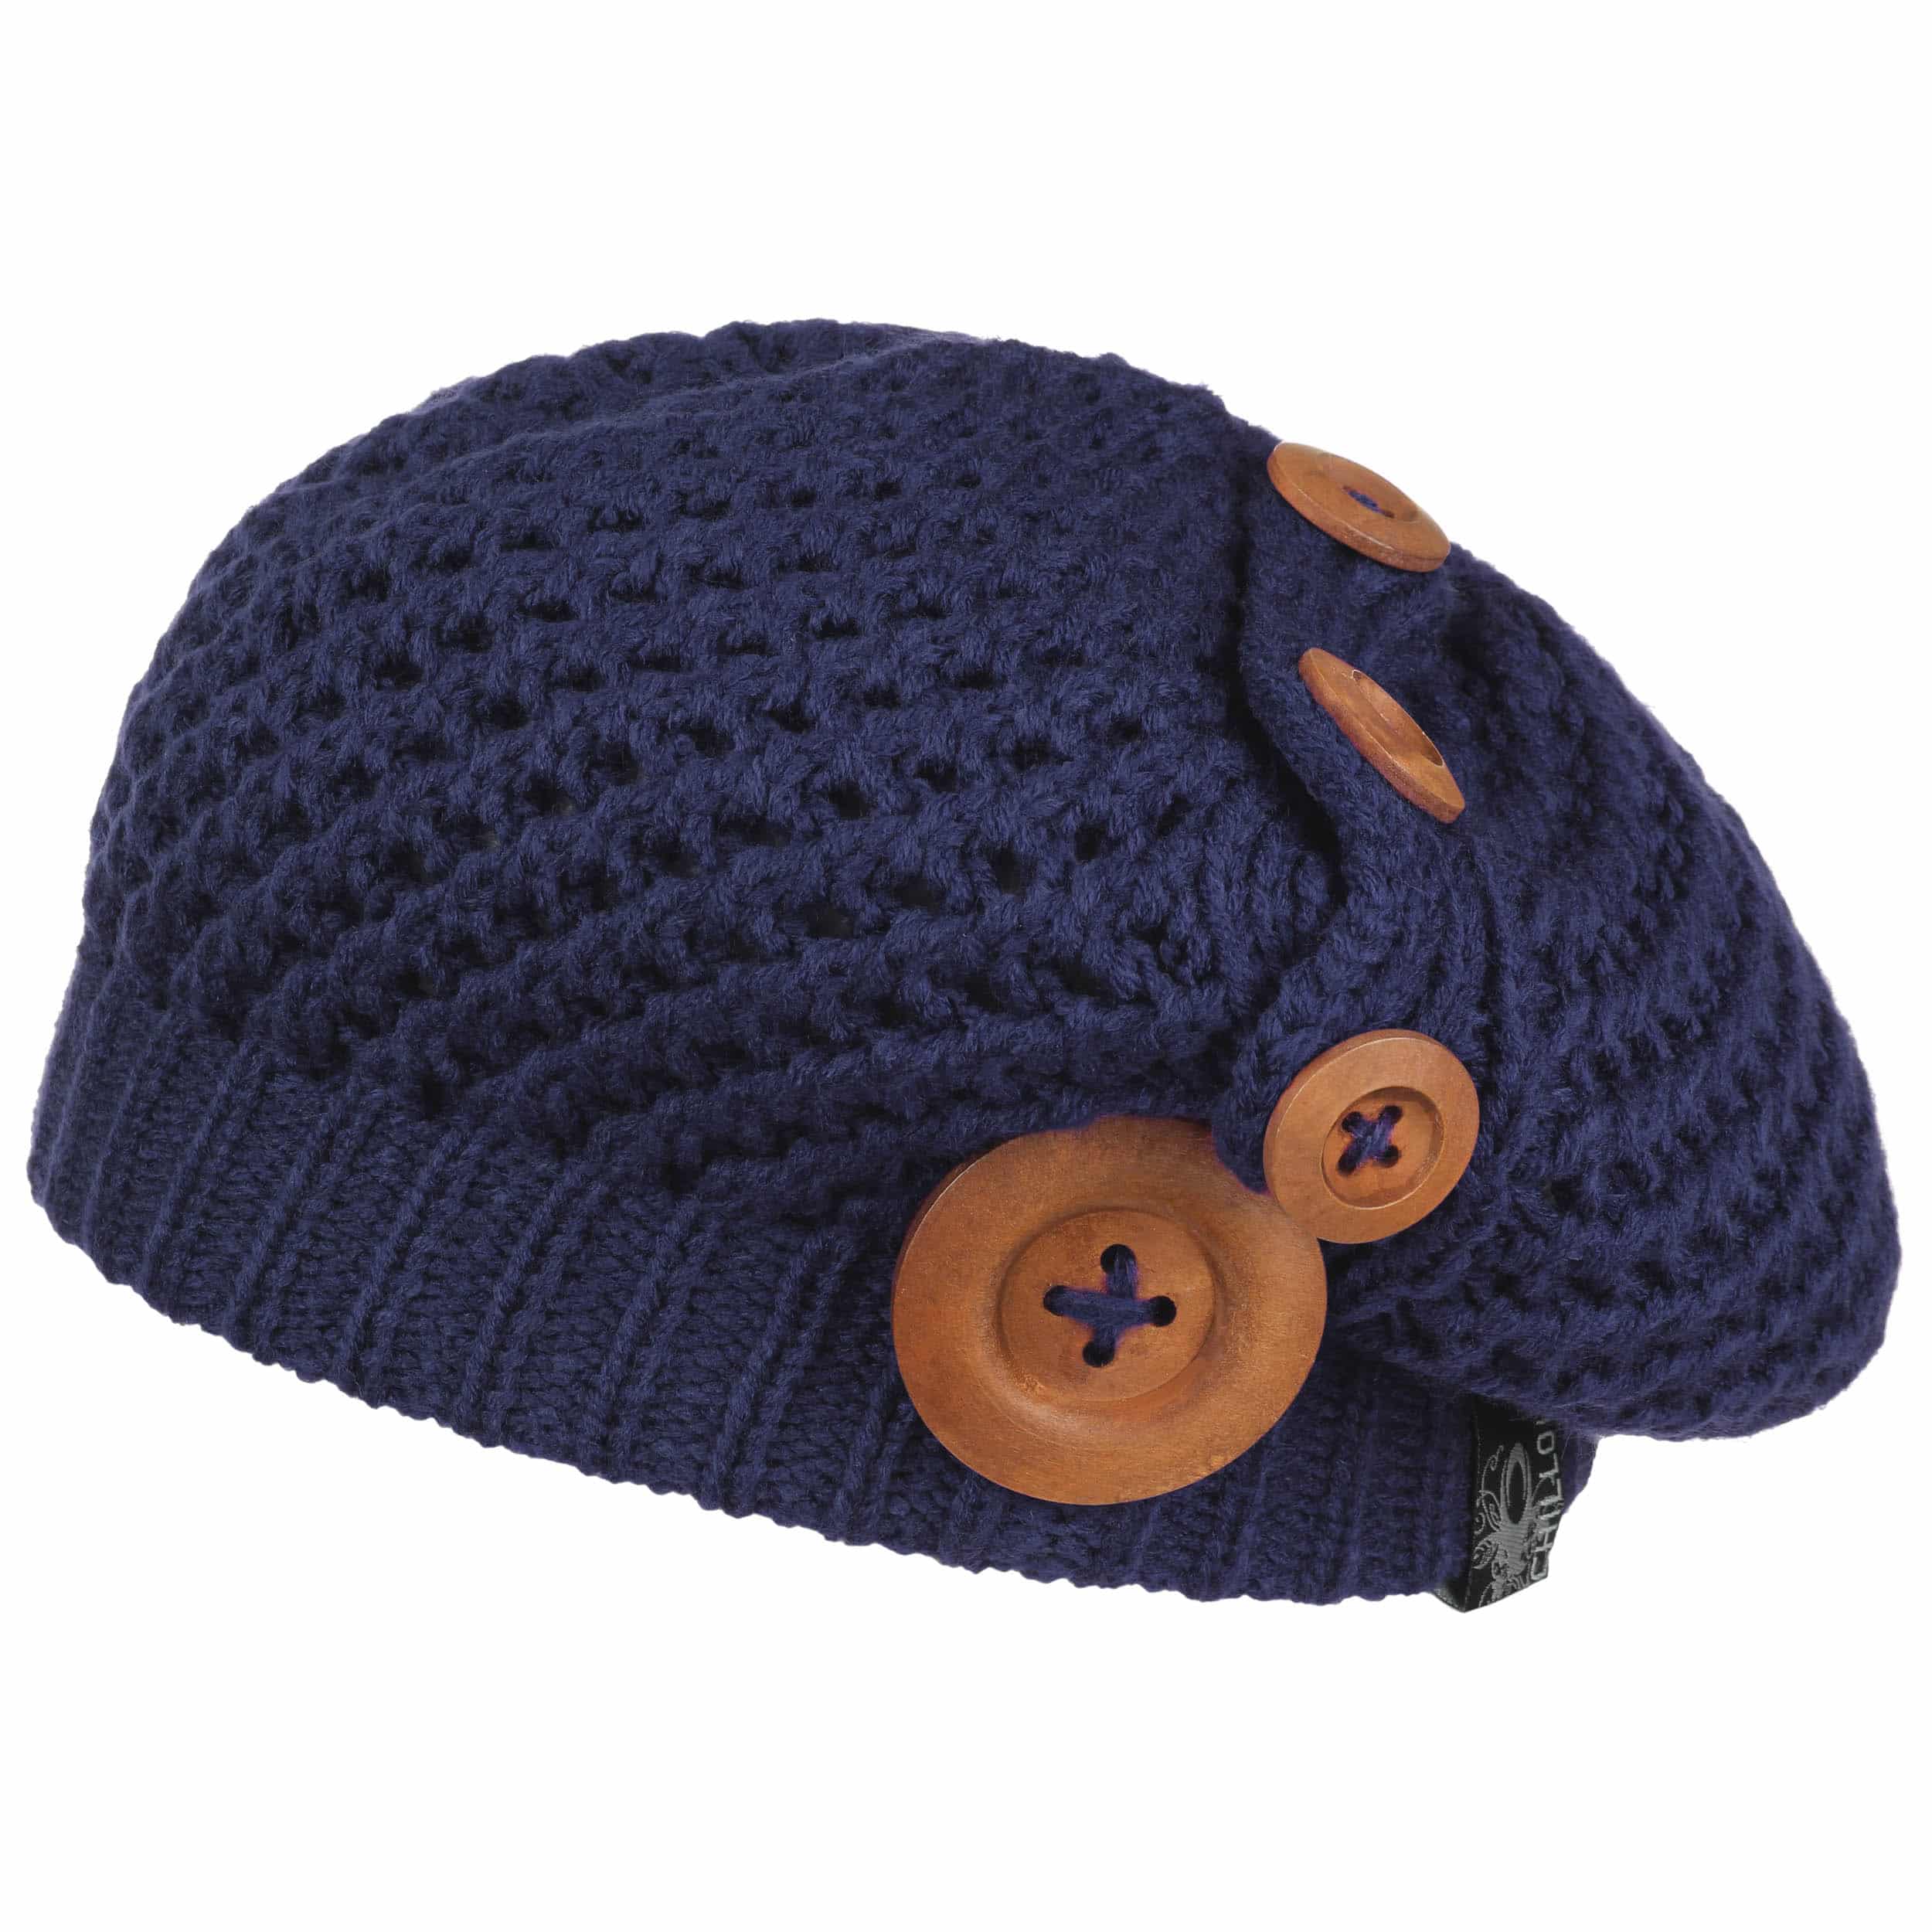 tricoter 1 beret